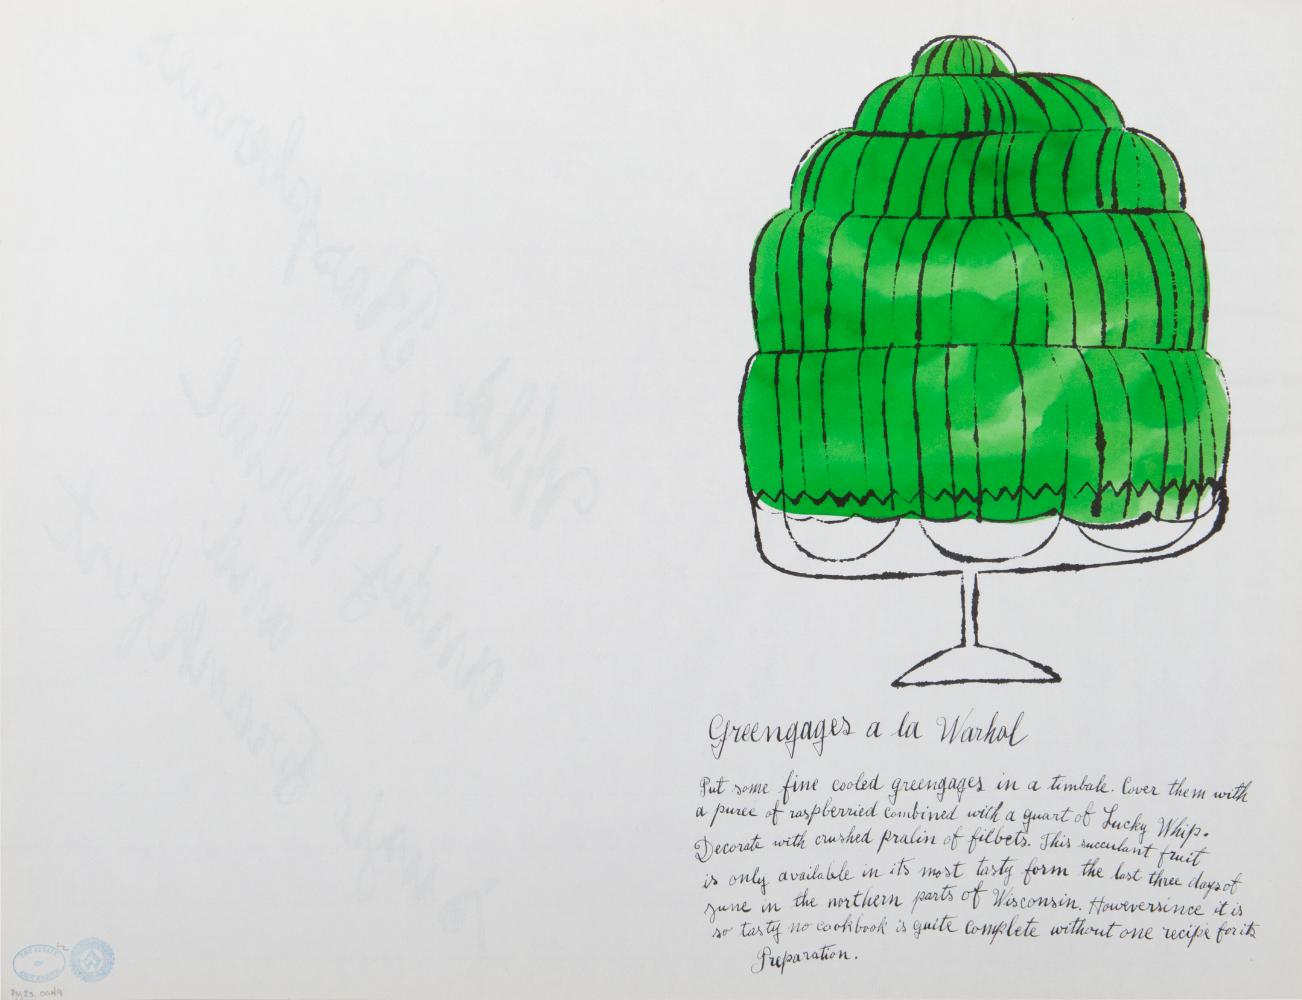 Greengages a la Warhol, from Wild Raspberries